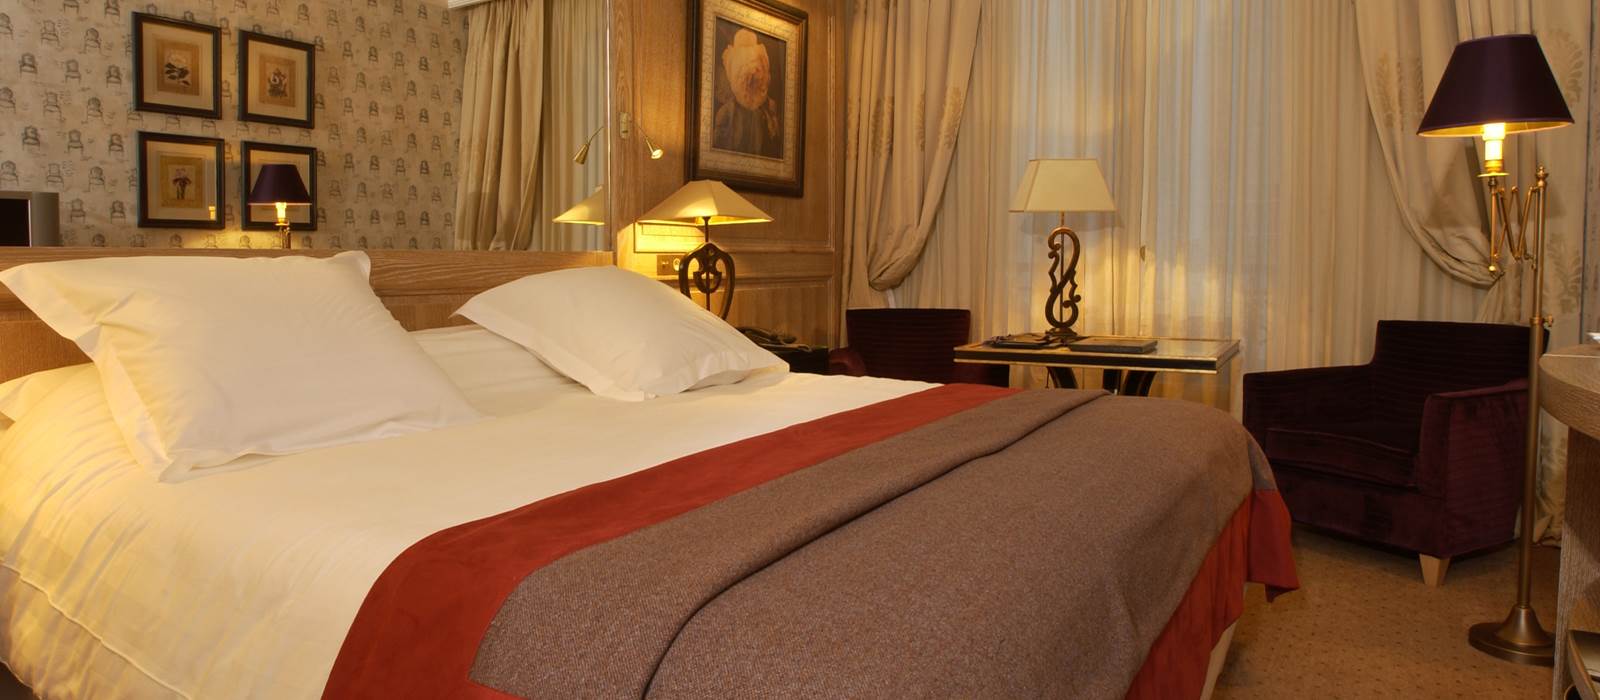 Classic Rooms Hotel Amarante Champs Elysees Paris